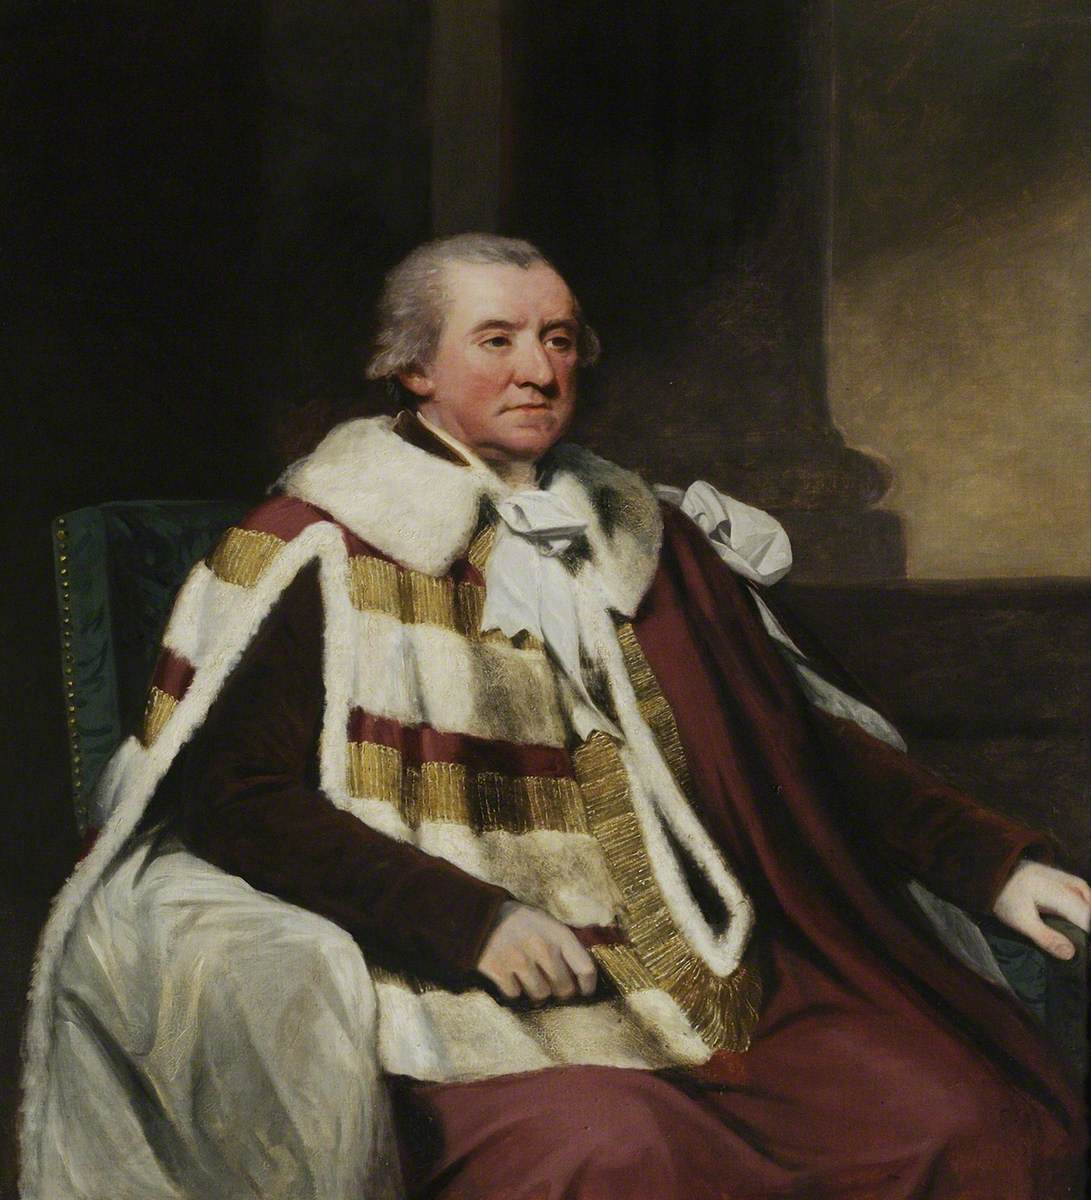 Jacob Pleydell-Bouverie (1750–1828), 2nd Earl of Radnor, FSA